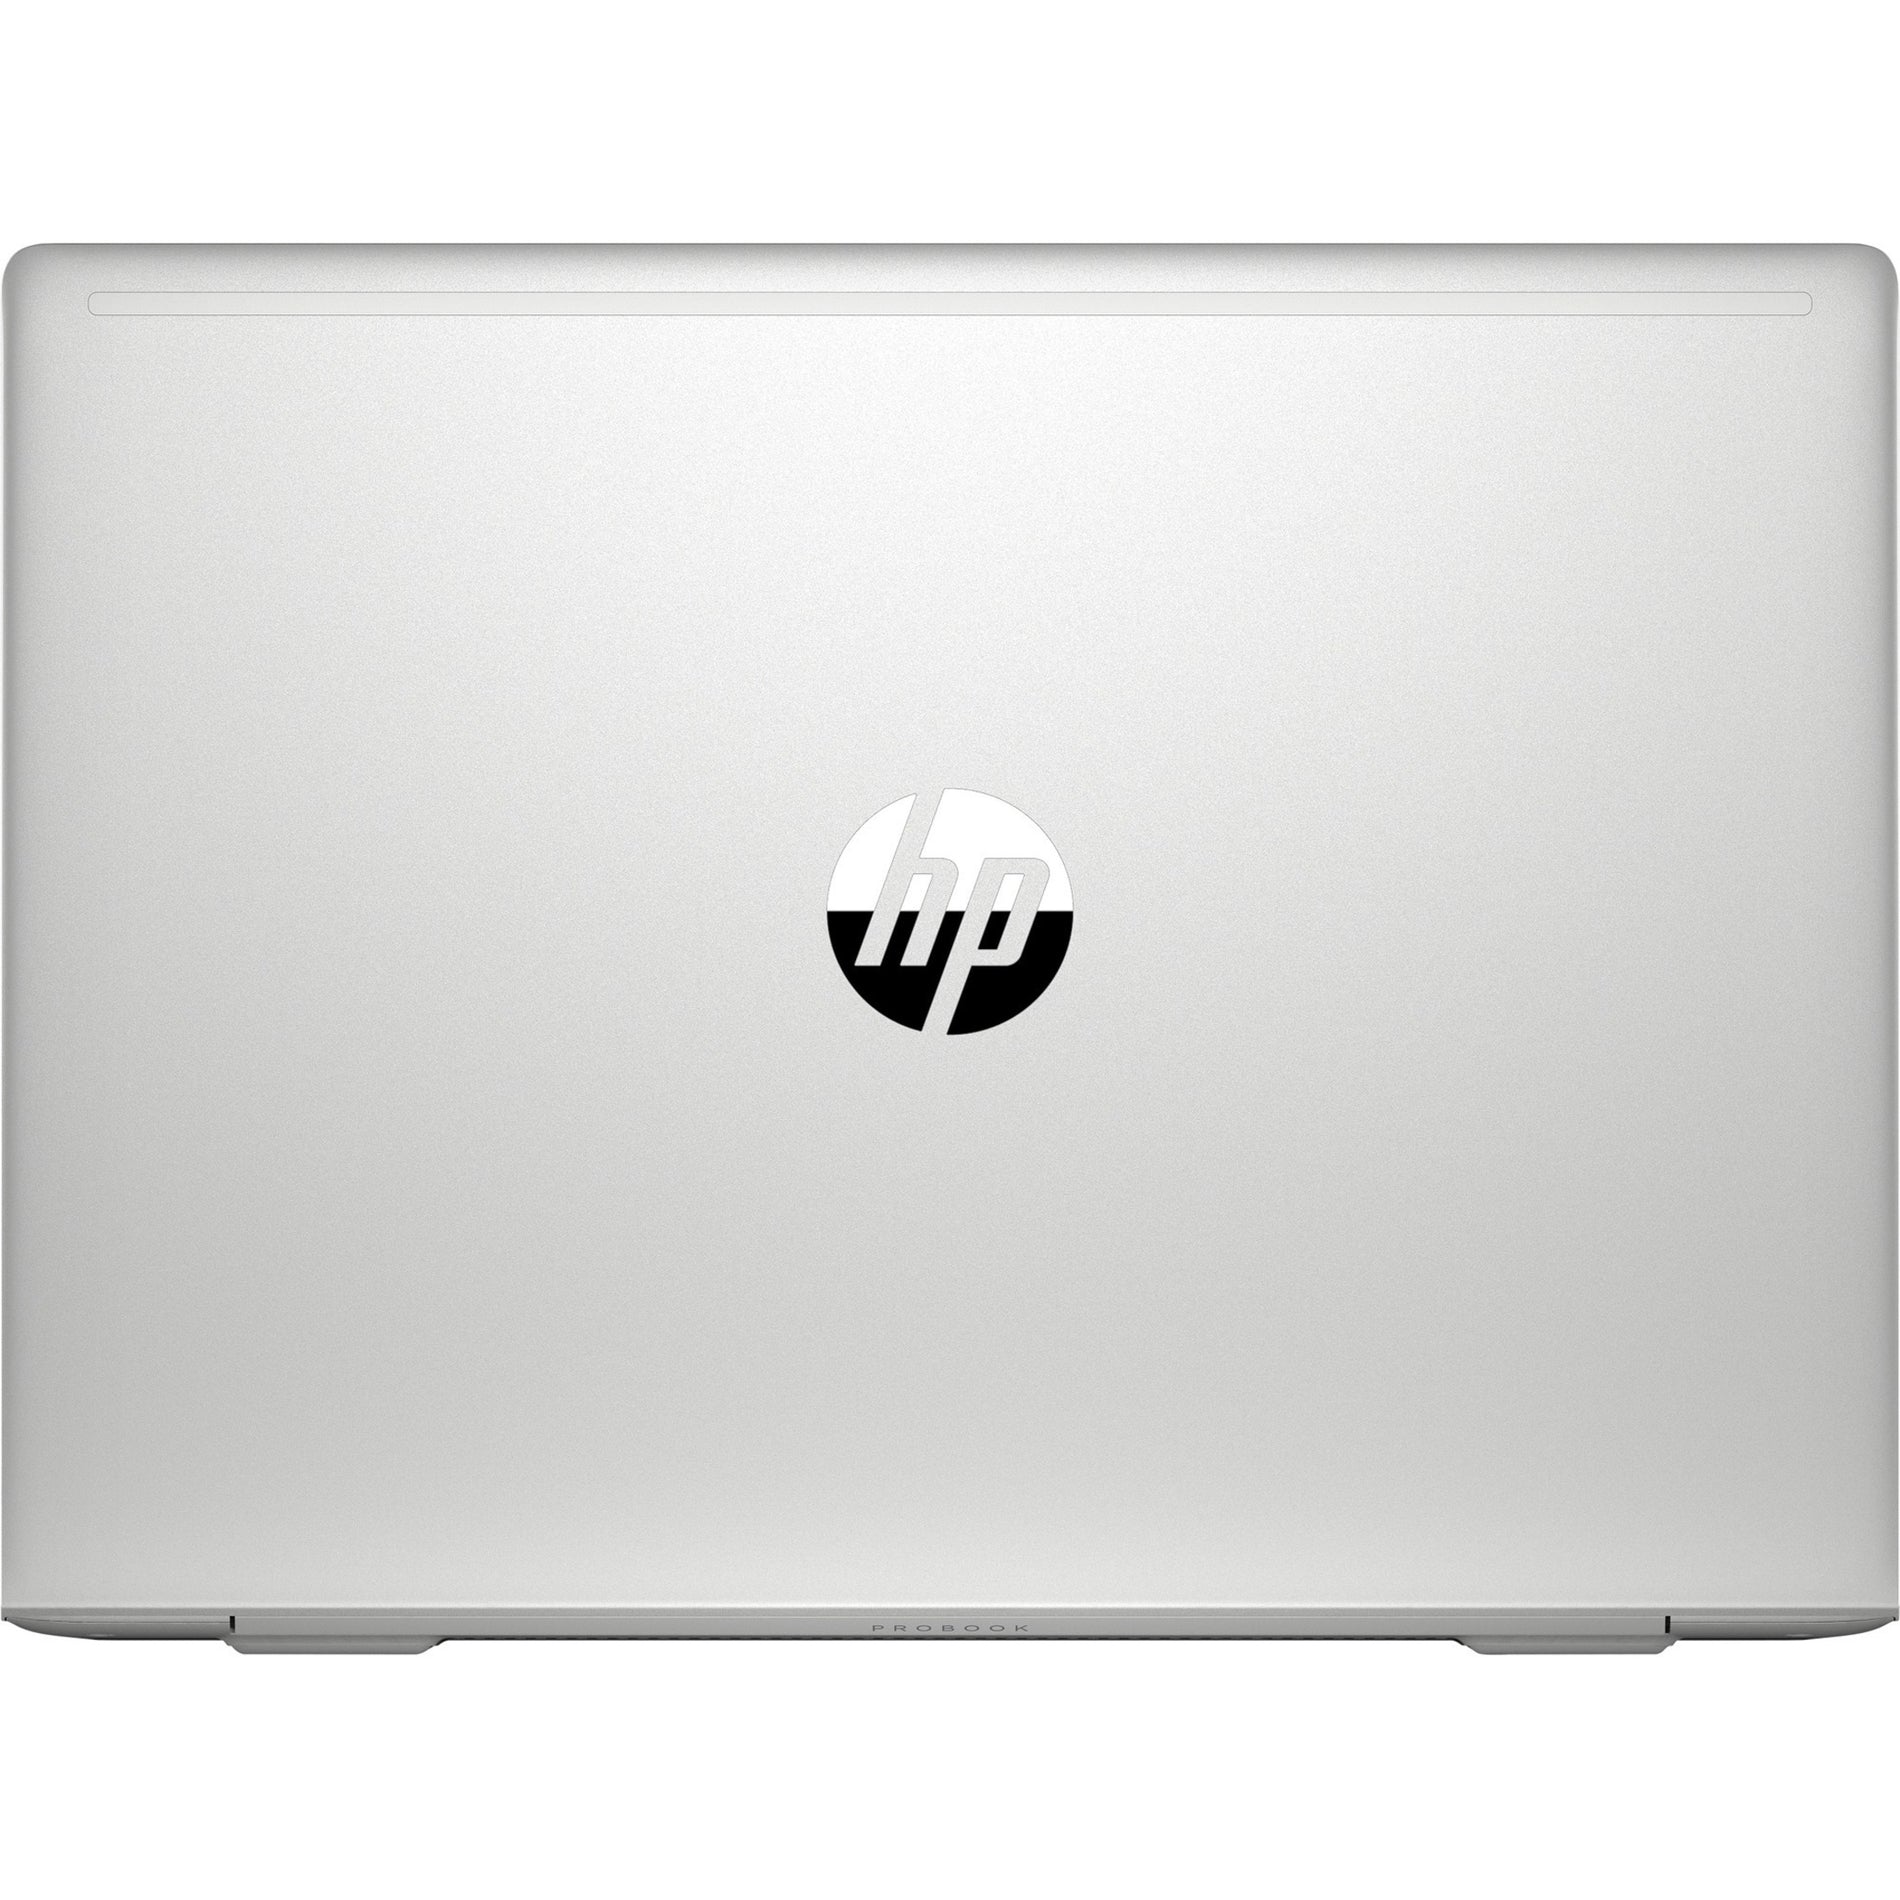 HP mt22 Mobile Thin Client Notebook, 14" HD Display, Intel Celeron 5205U, 8GB RAM, 128GB SSD, Windows 10 IoT Enterprise